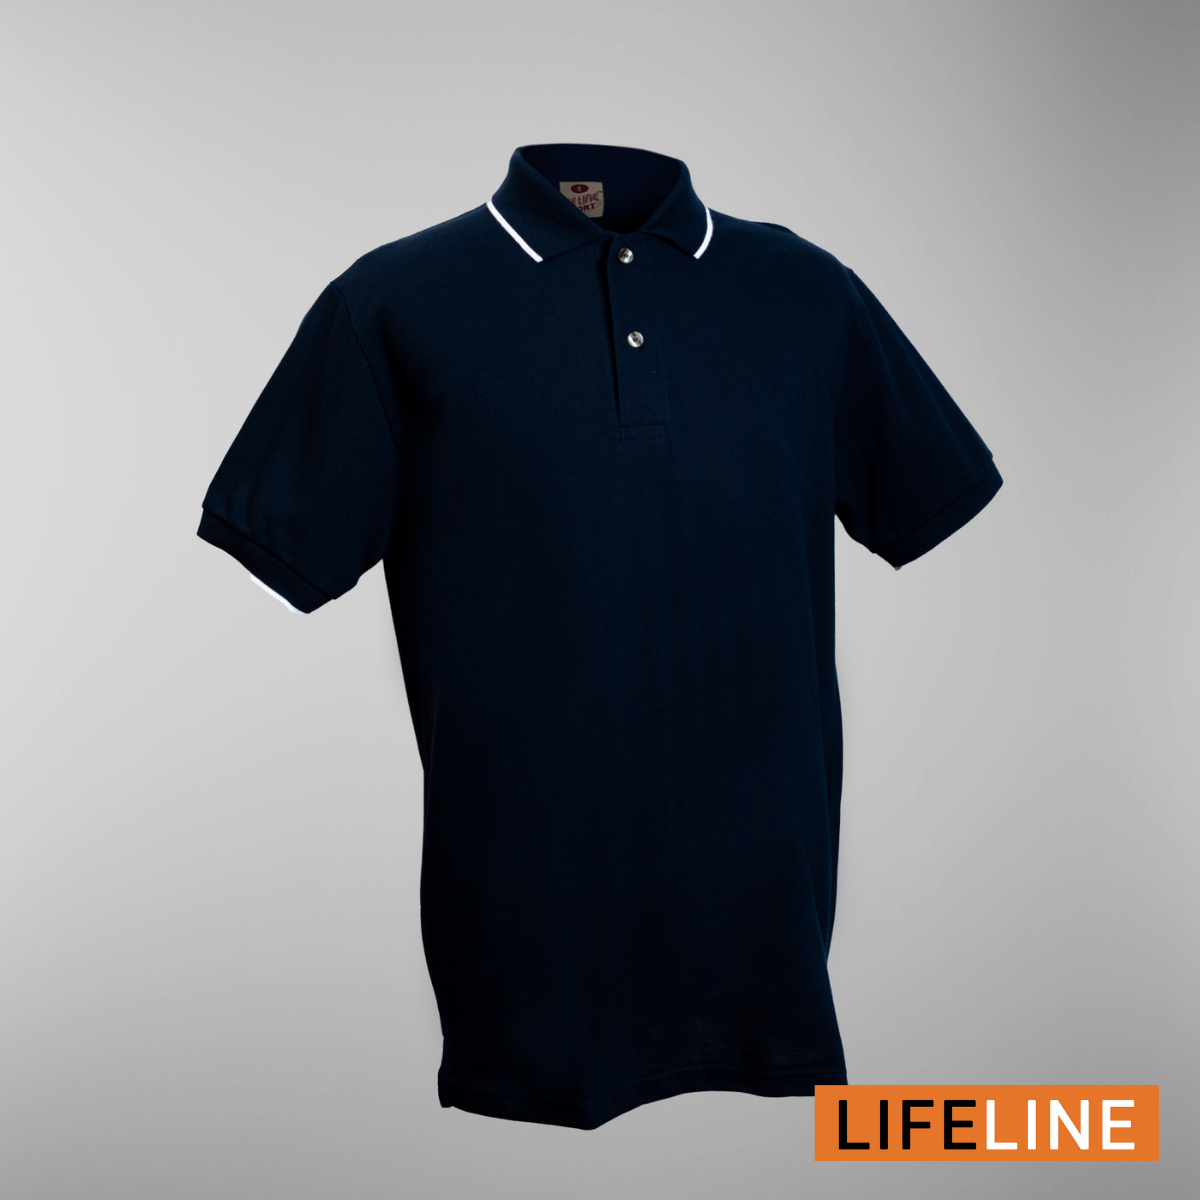 Lifeline Line Polo Shirt (Atlast)